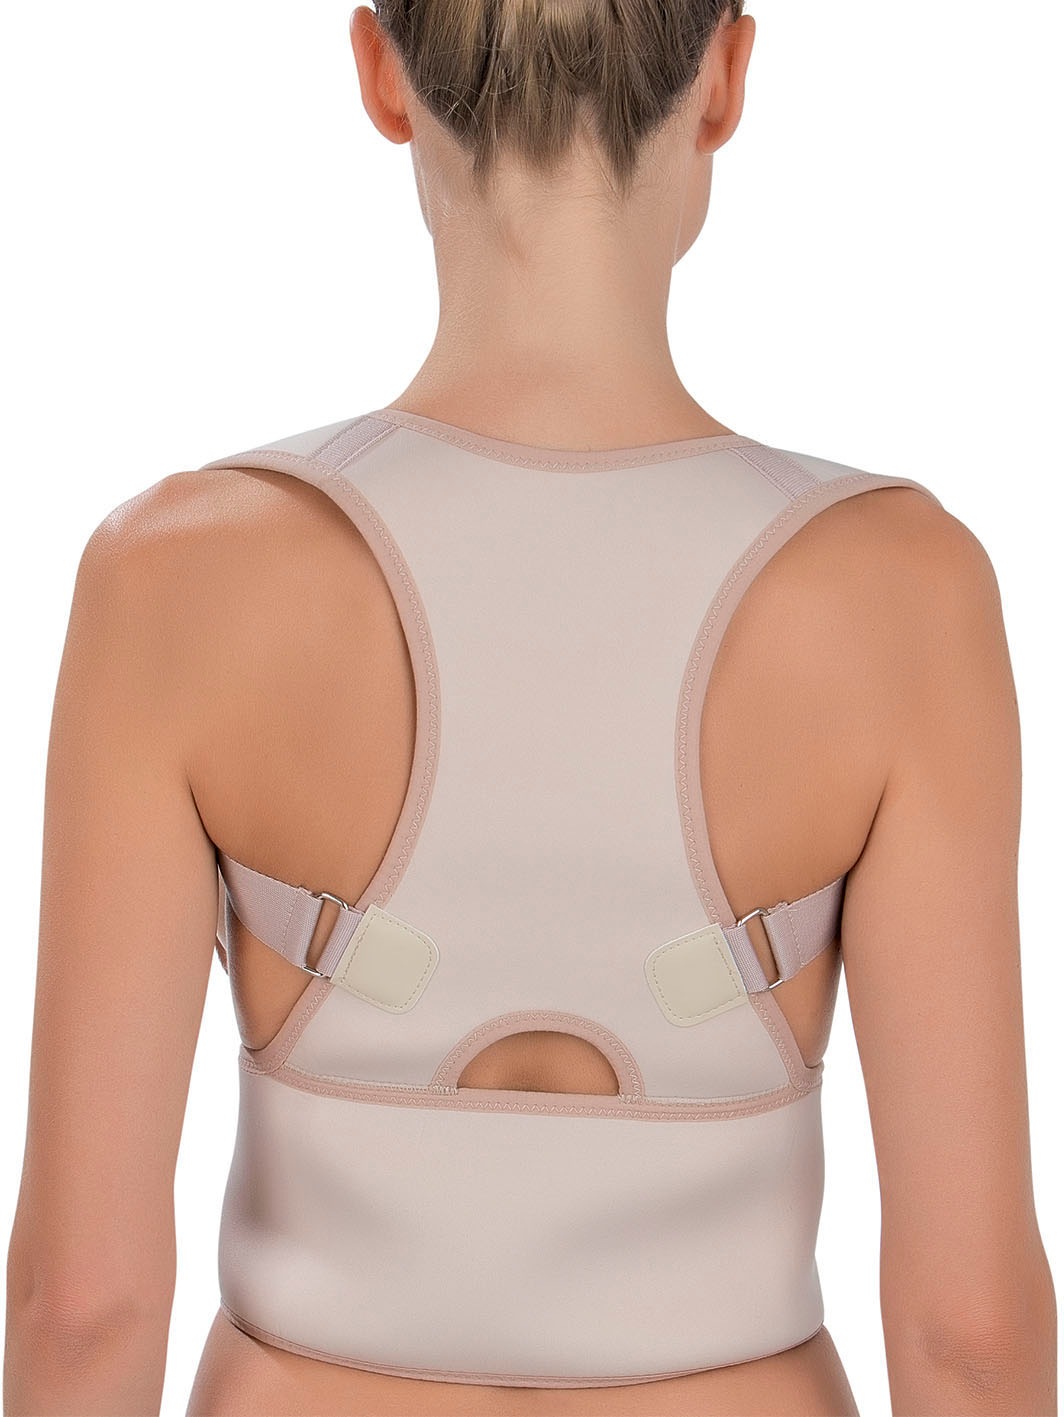 VITALmaxx Rücken Stützgürtel, zur Unterstützung der Muskulatur